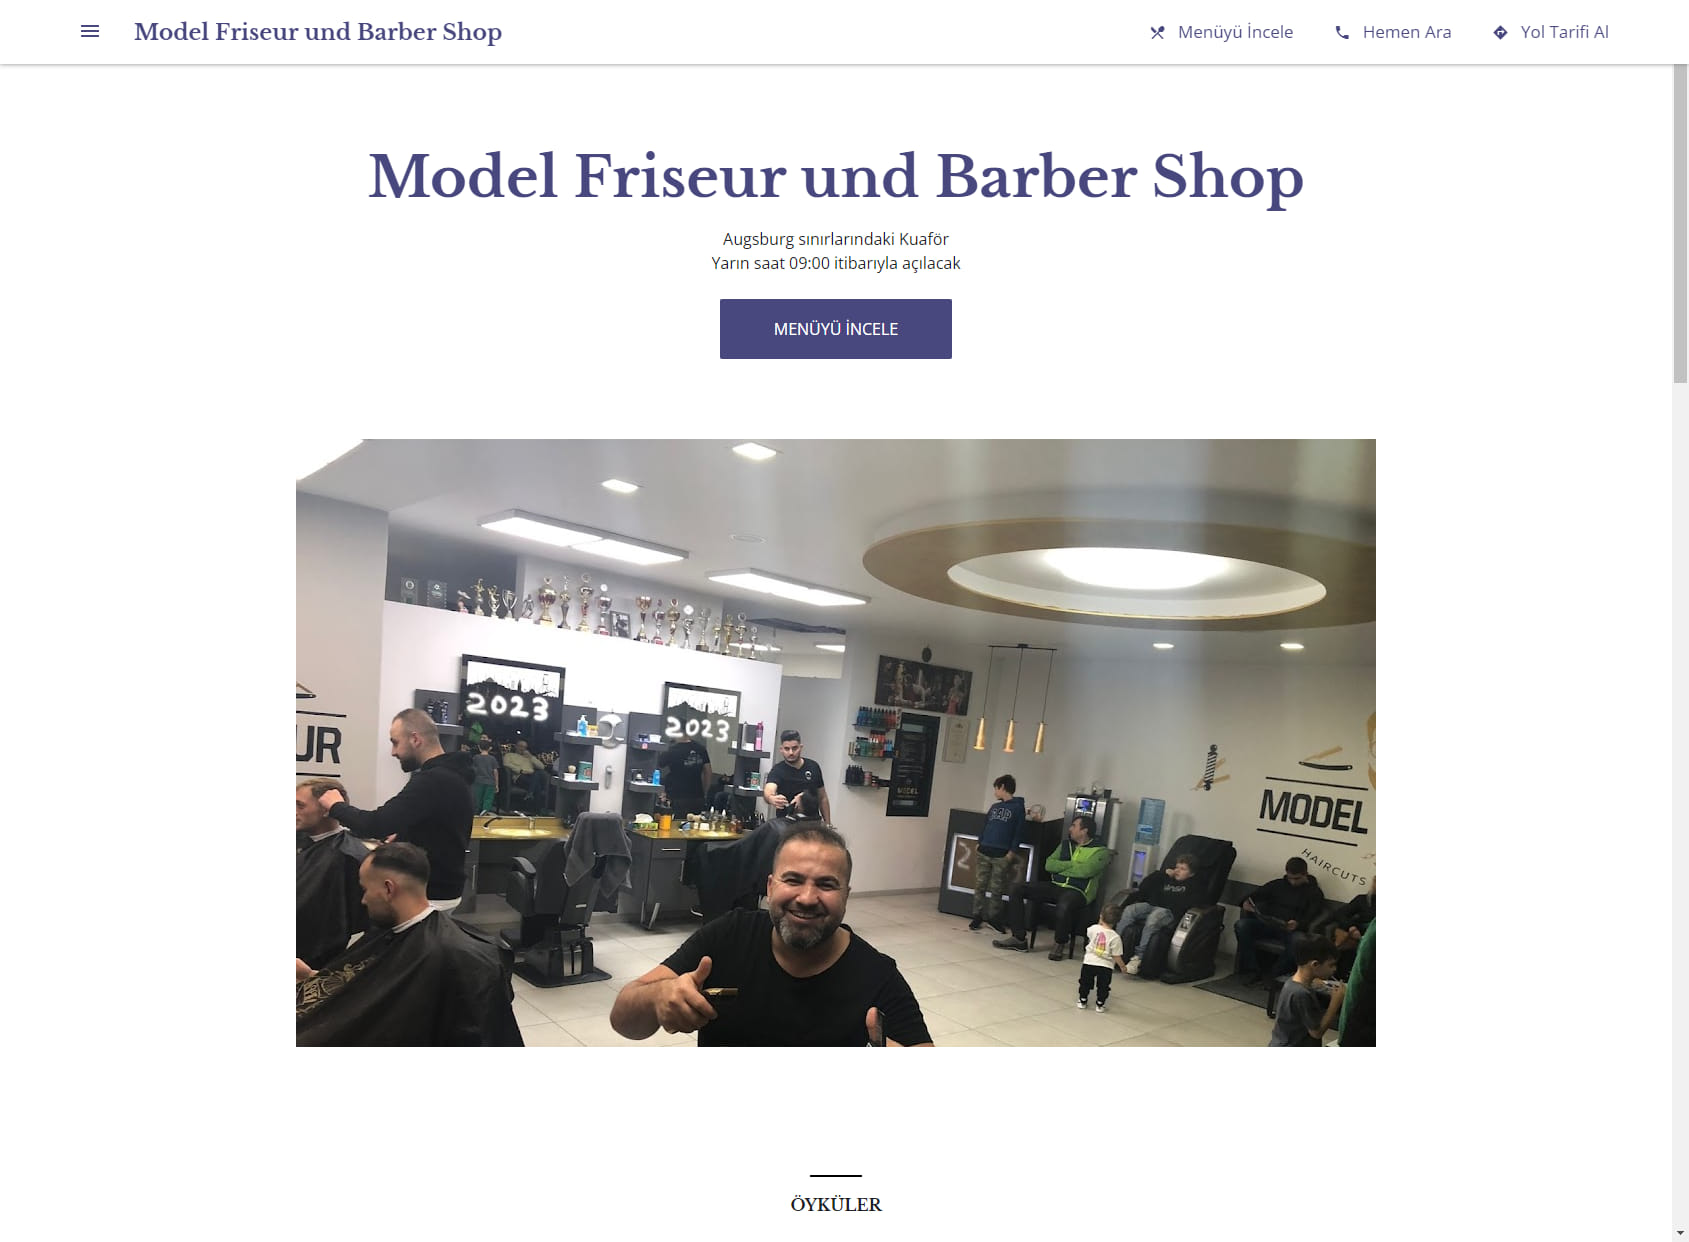 Model Herrenfriseursalon / Barber Shop / Barbier